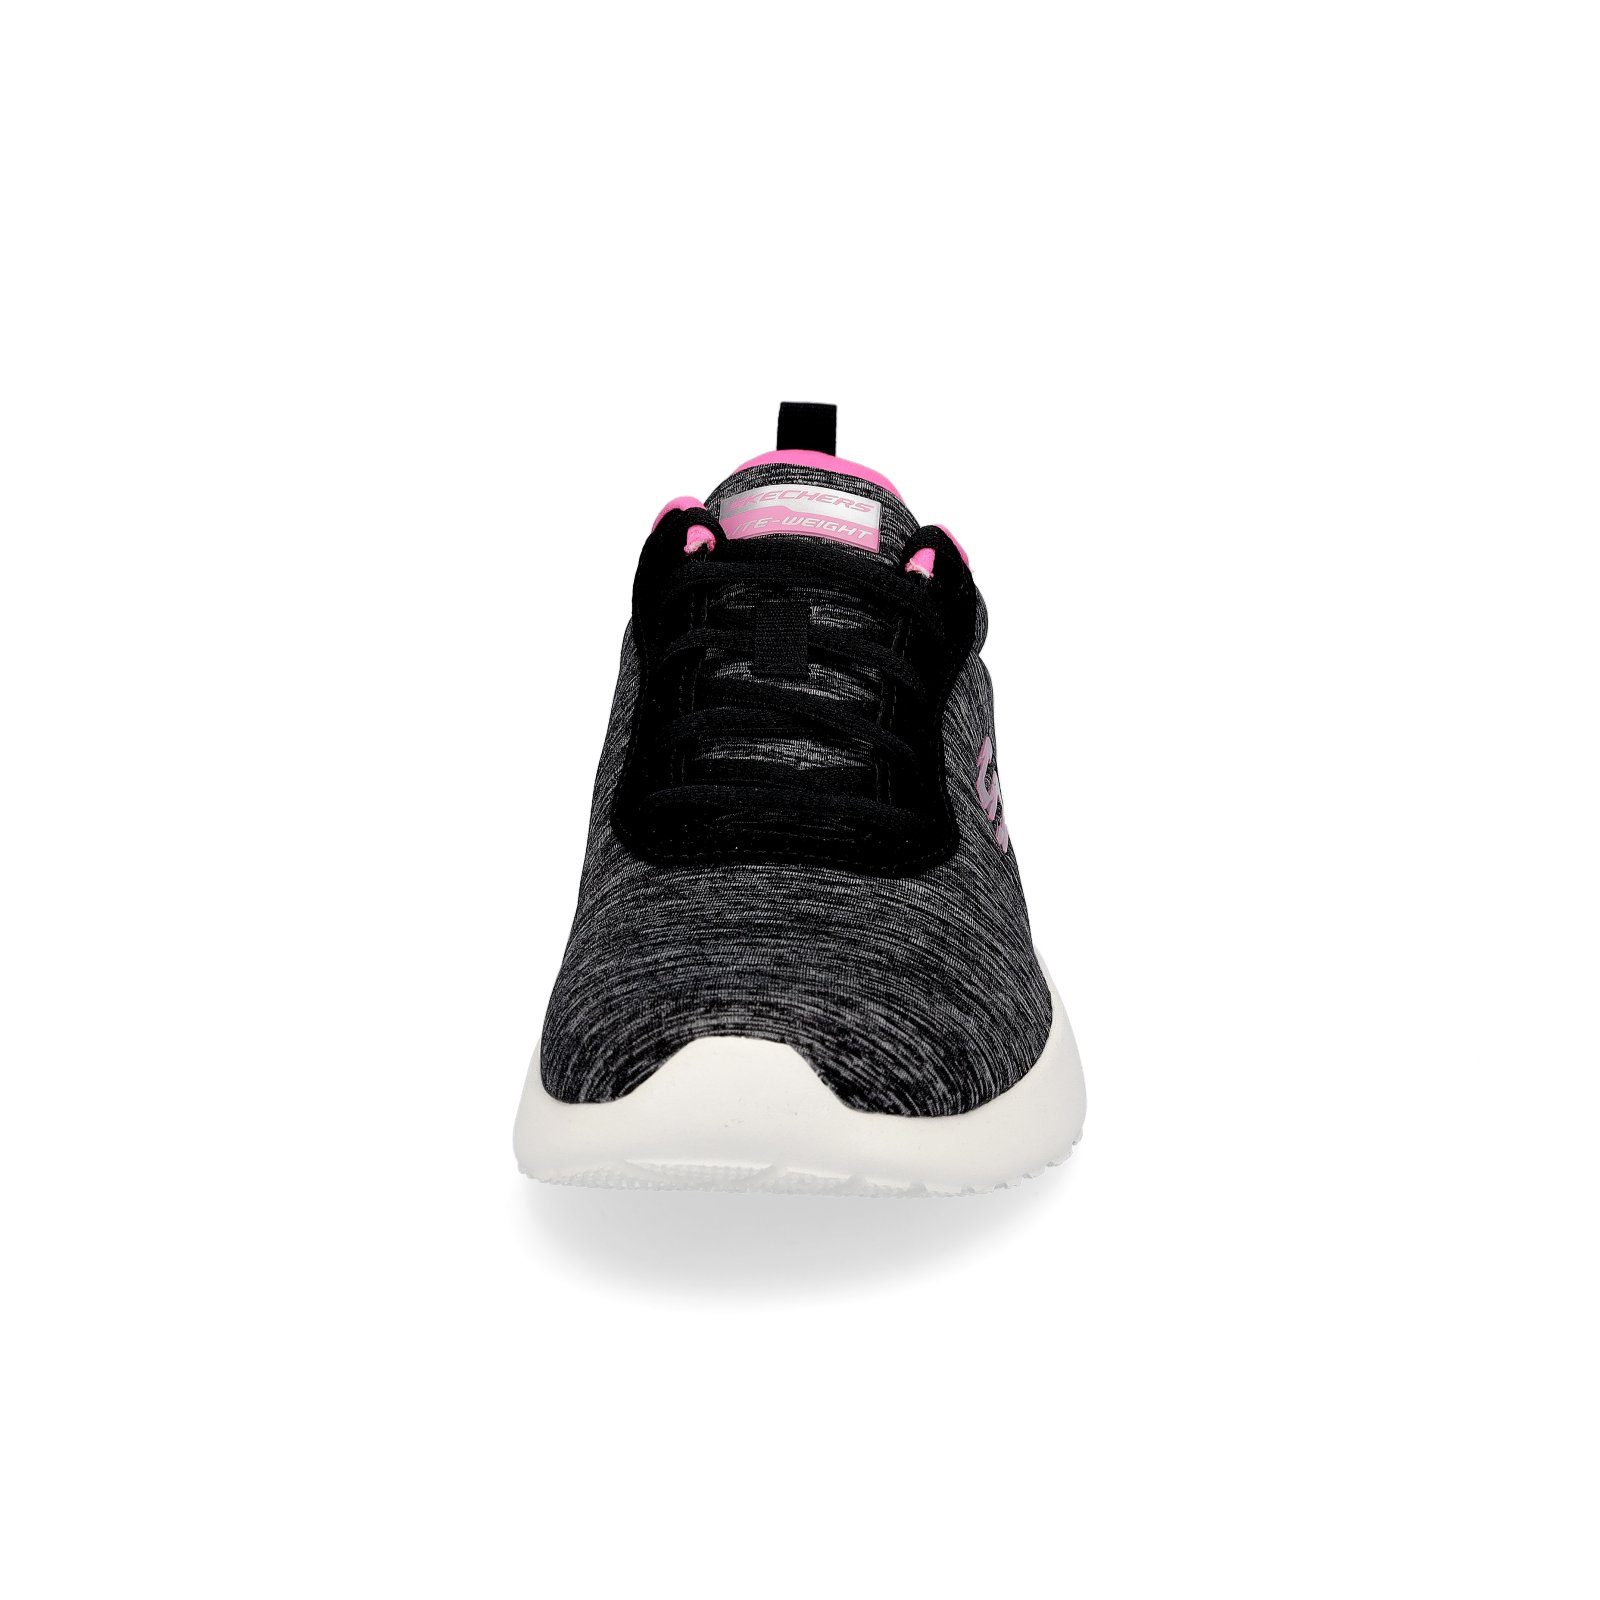 Damen Skechers pink schwarz Skechers Paradise Sneaker Sneaker black/hot Waves pink